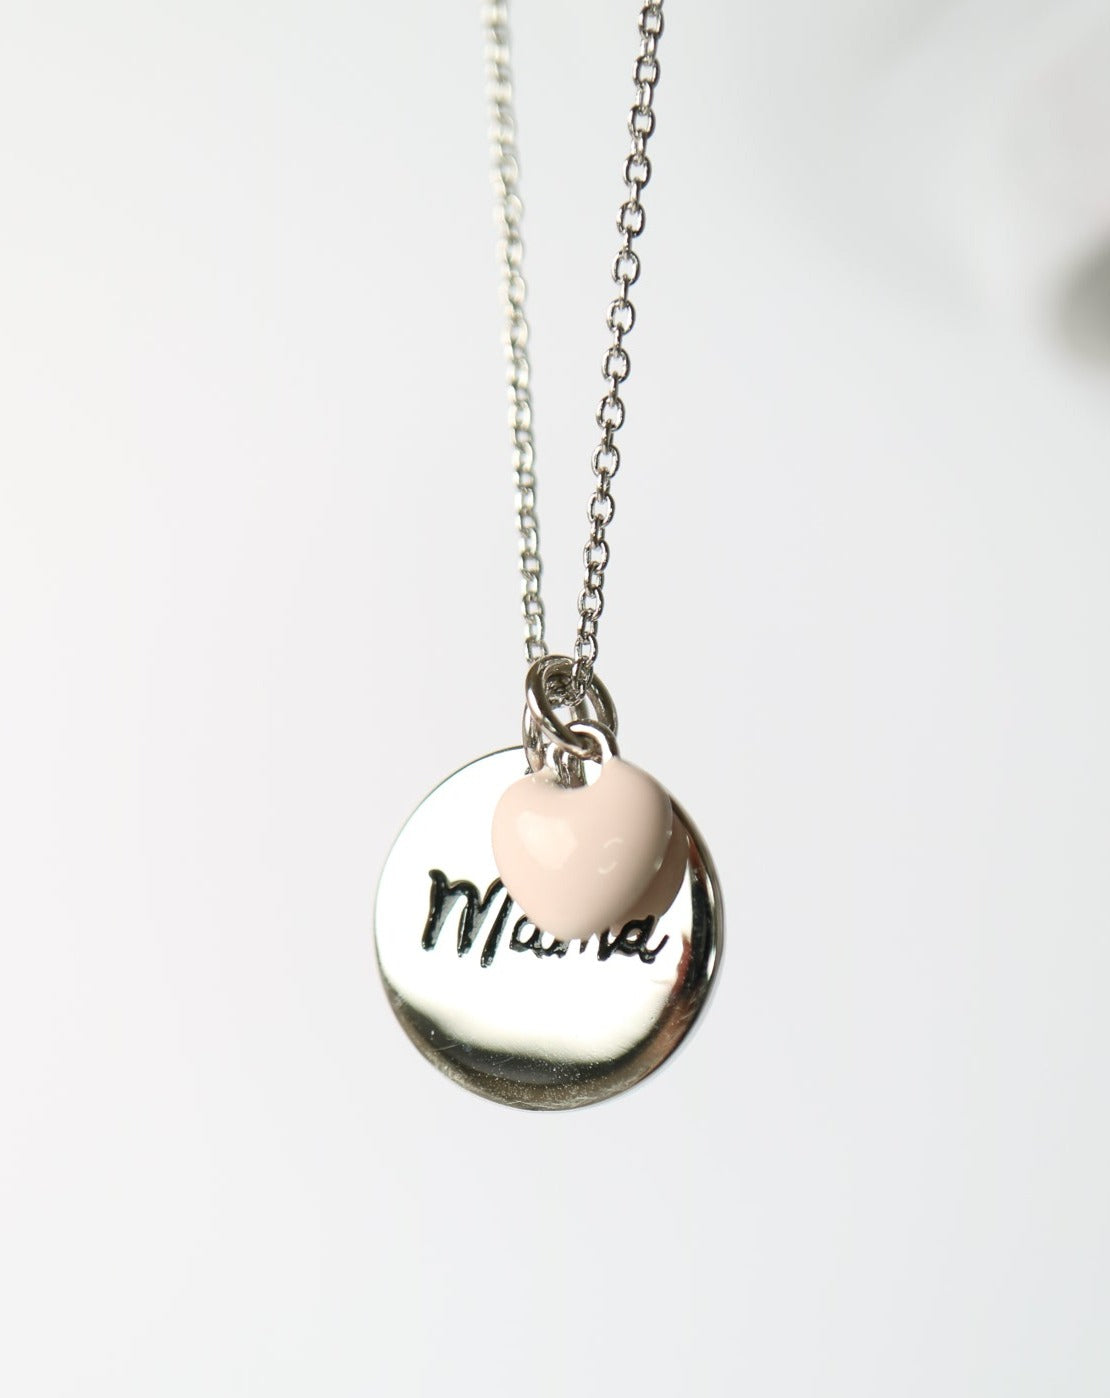 Silver Mama Heart Love Necklace